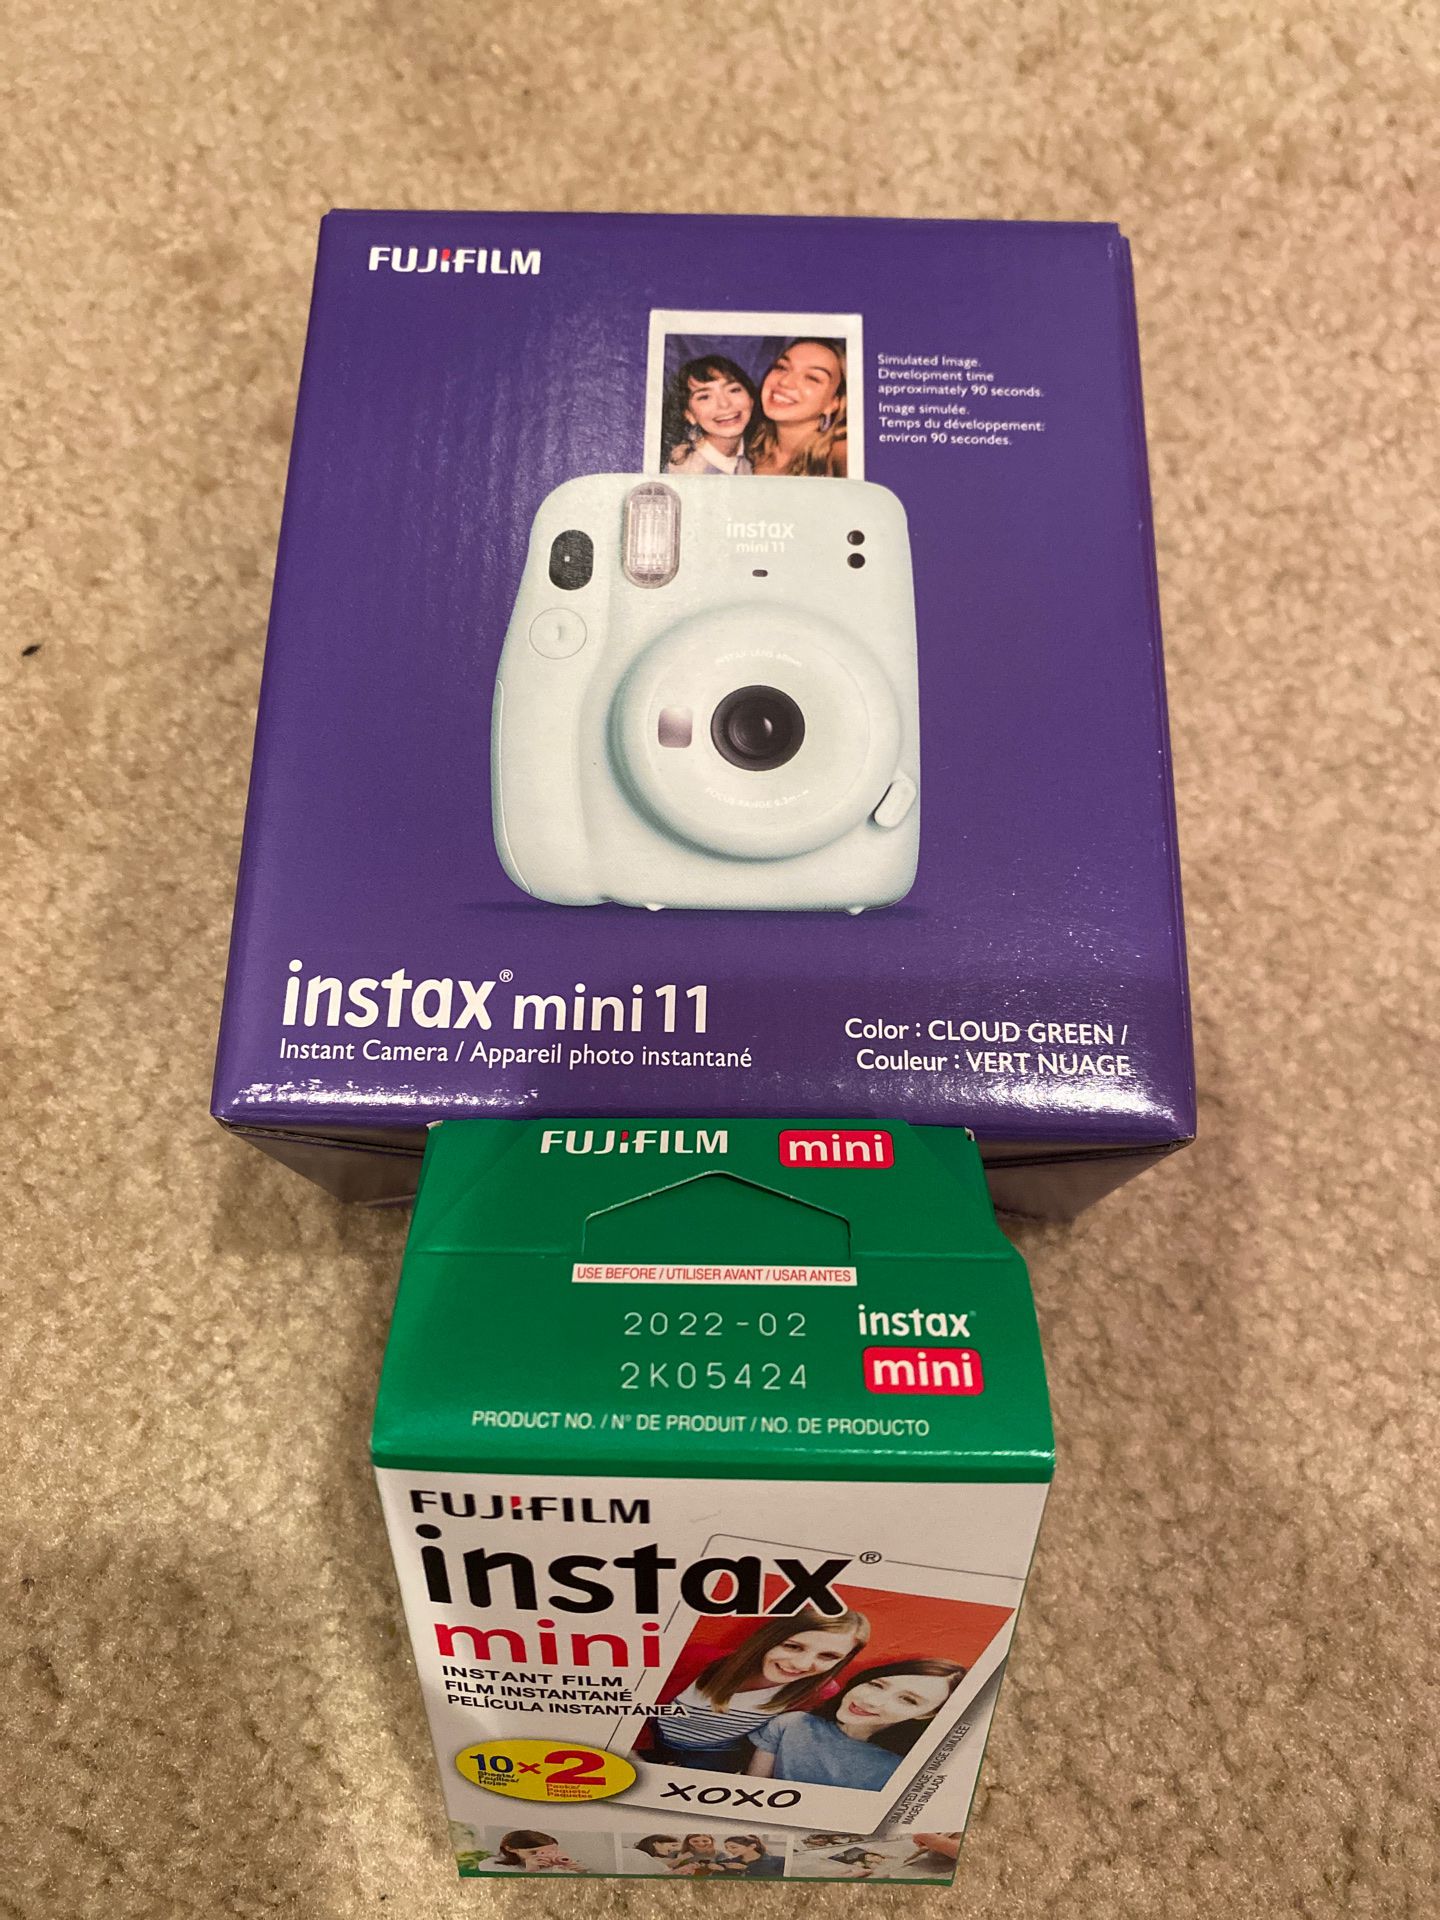 Fujifilm Instax mini 11 with FILM